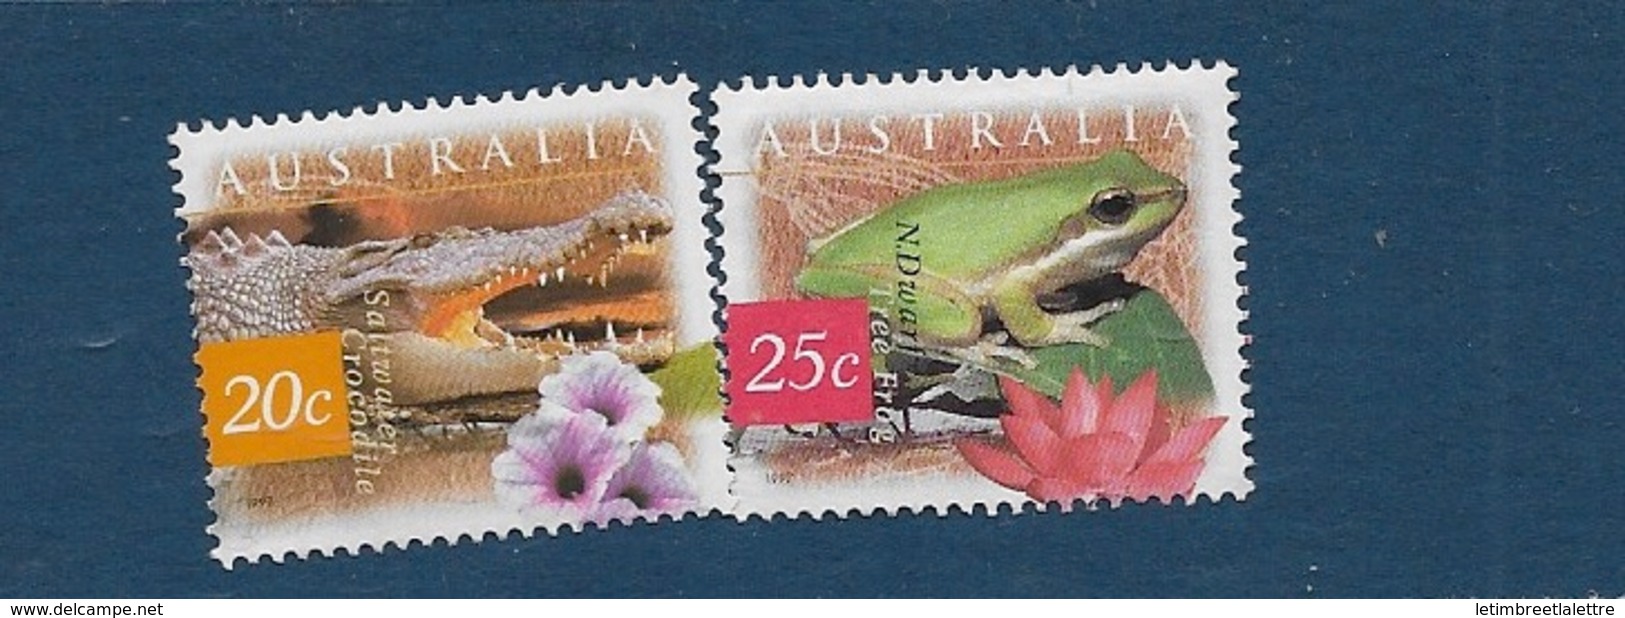 Australie N°1588 - 1589** - Mint Stamps